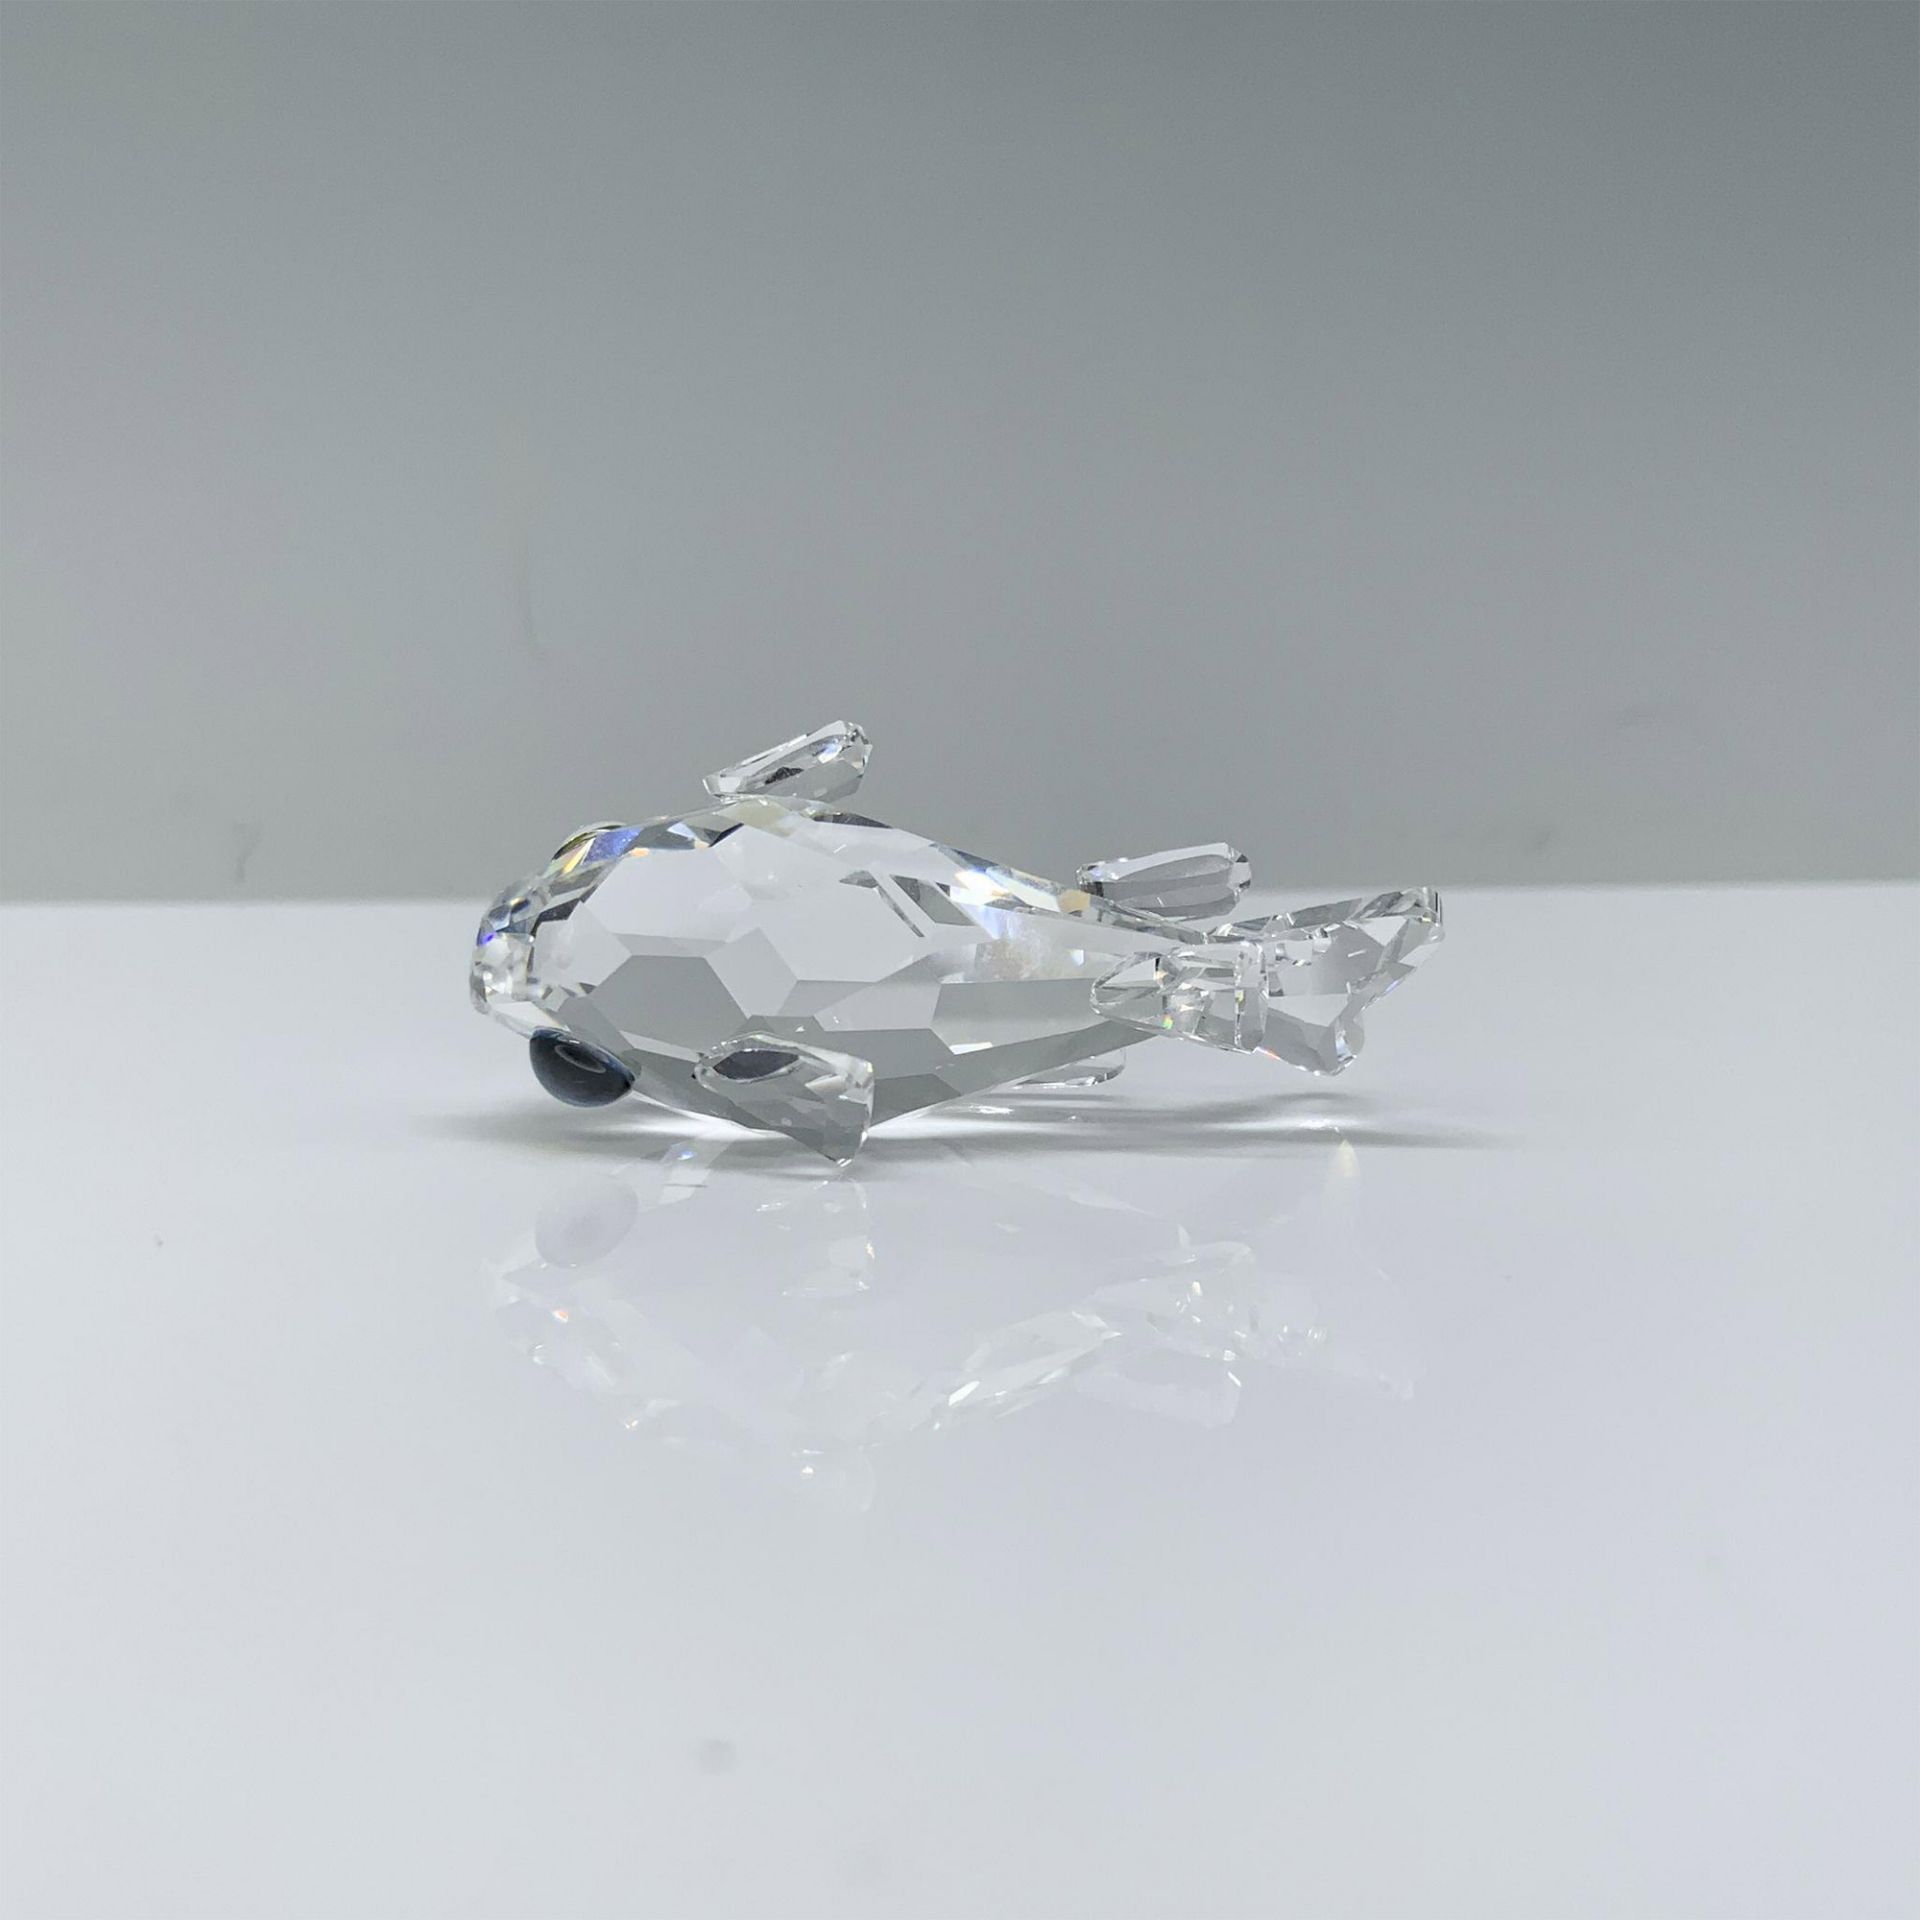 Swarovski Crystal Figurine, Mini Goldfish 202103 - Image 3 of 4